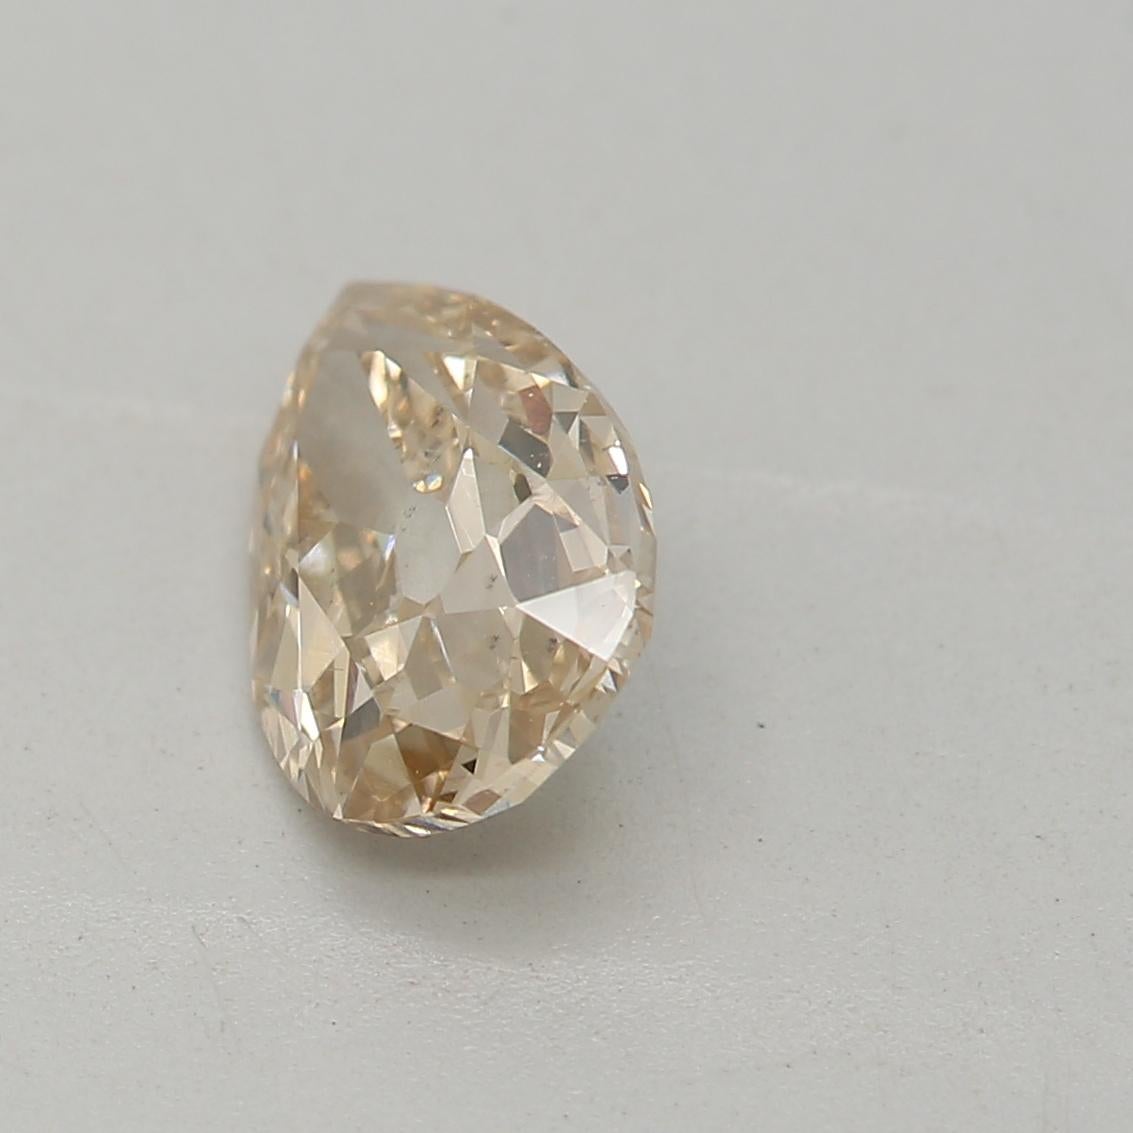 Pear Cut 0.74 Carat Fancy Light Yellow Brown Pear cut diamond SI1 Clarity GIA Certified For Sale